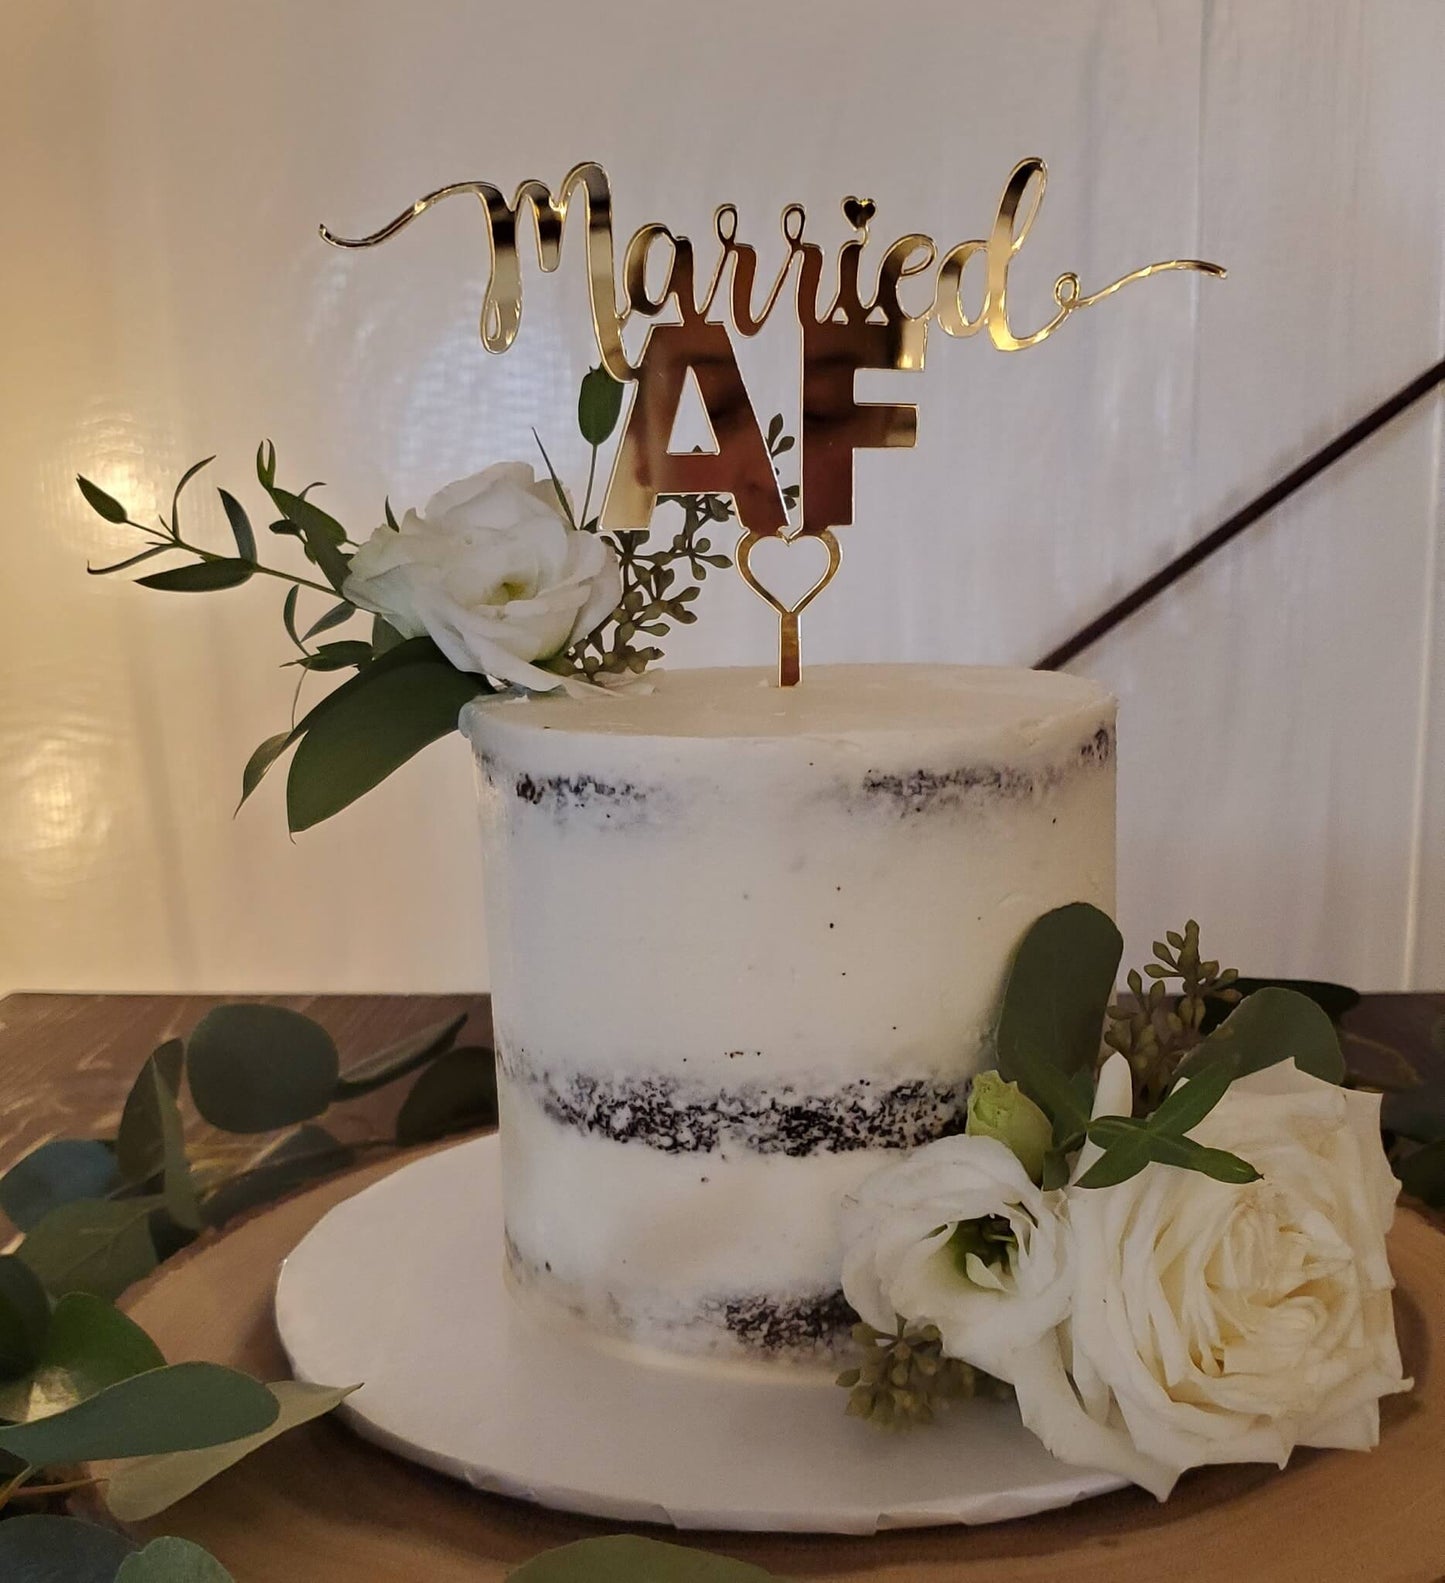 married AF wedding cake topper on semi naked wedding cake in Phoenix.